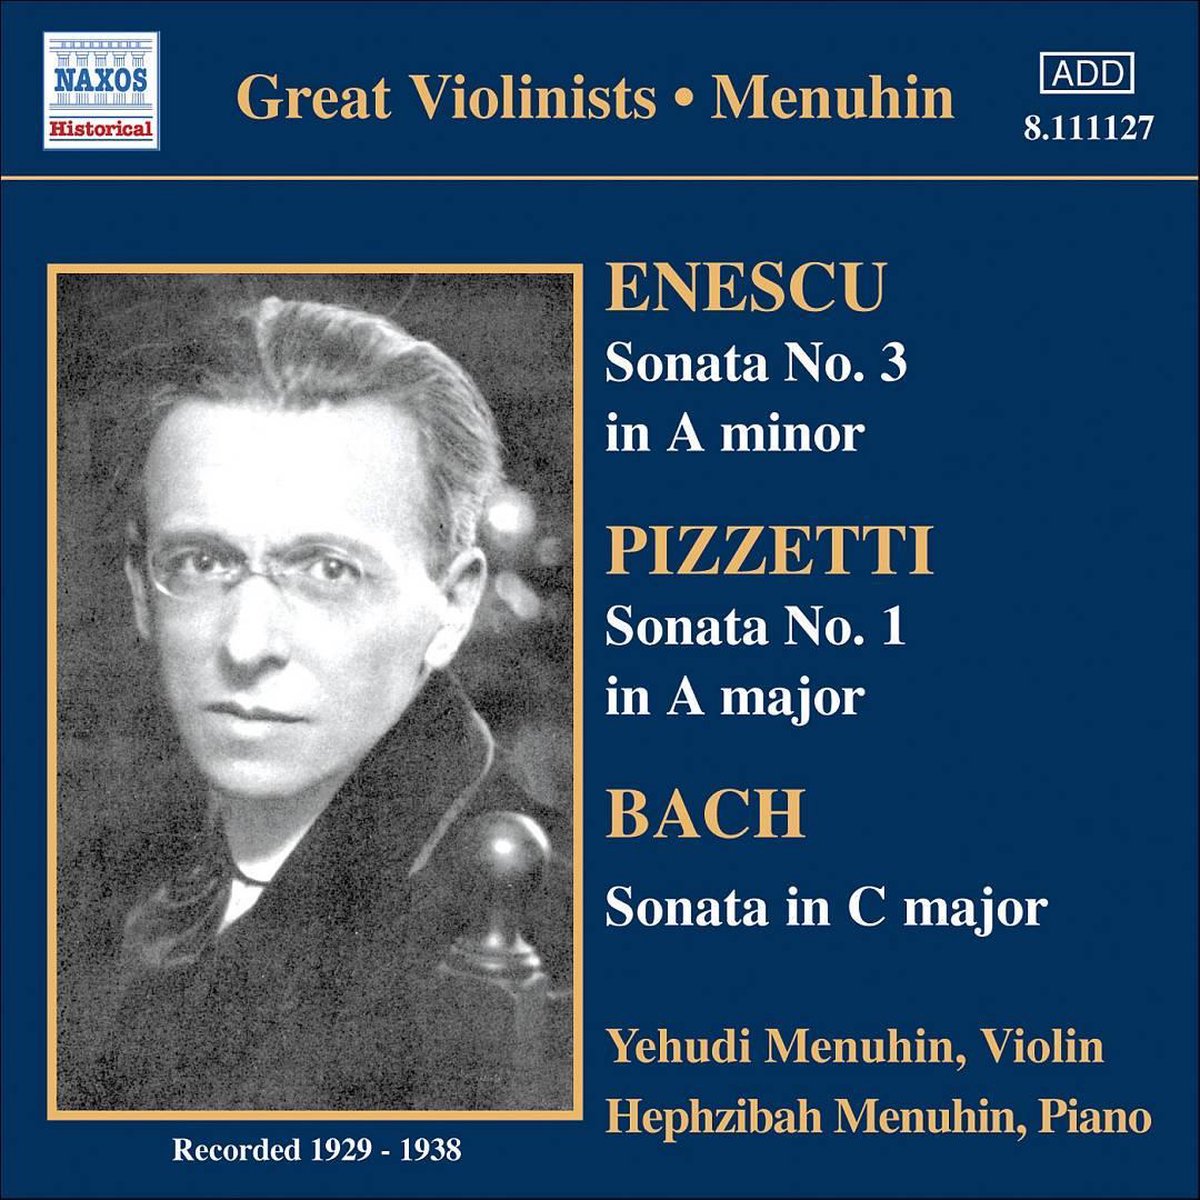 Pizzetti. Enescu. Bach: Violin Sonatas | Ildebrando Pizzetti, George Enescu, Johann Sebastian Bach, Yehudi Menuhin